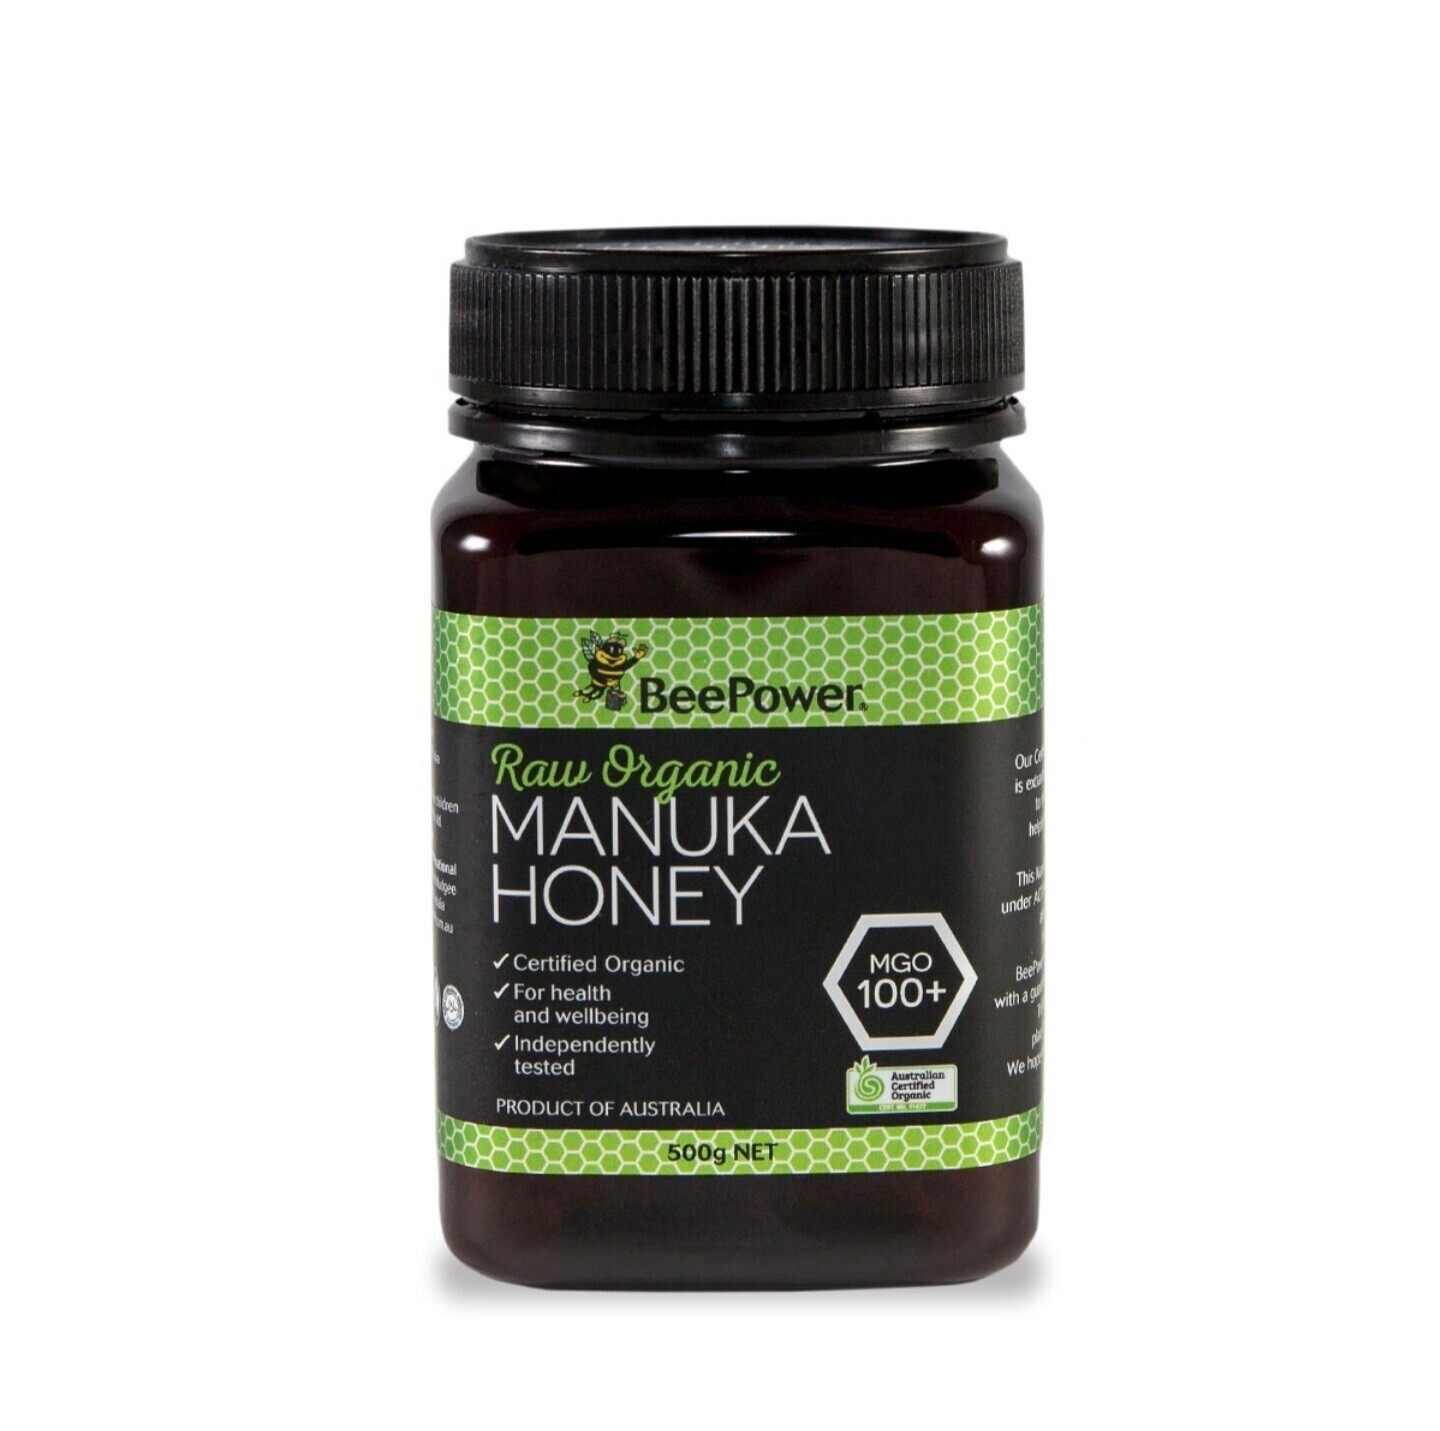 Bee Power Raw Organic Manuka Honey MGO 100+ 250g